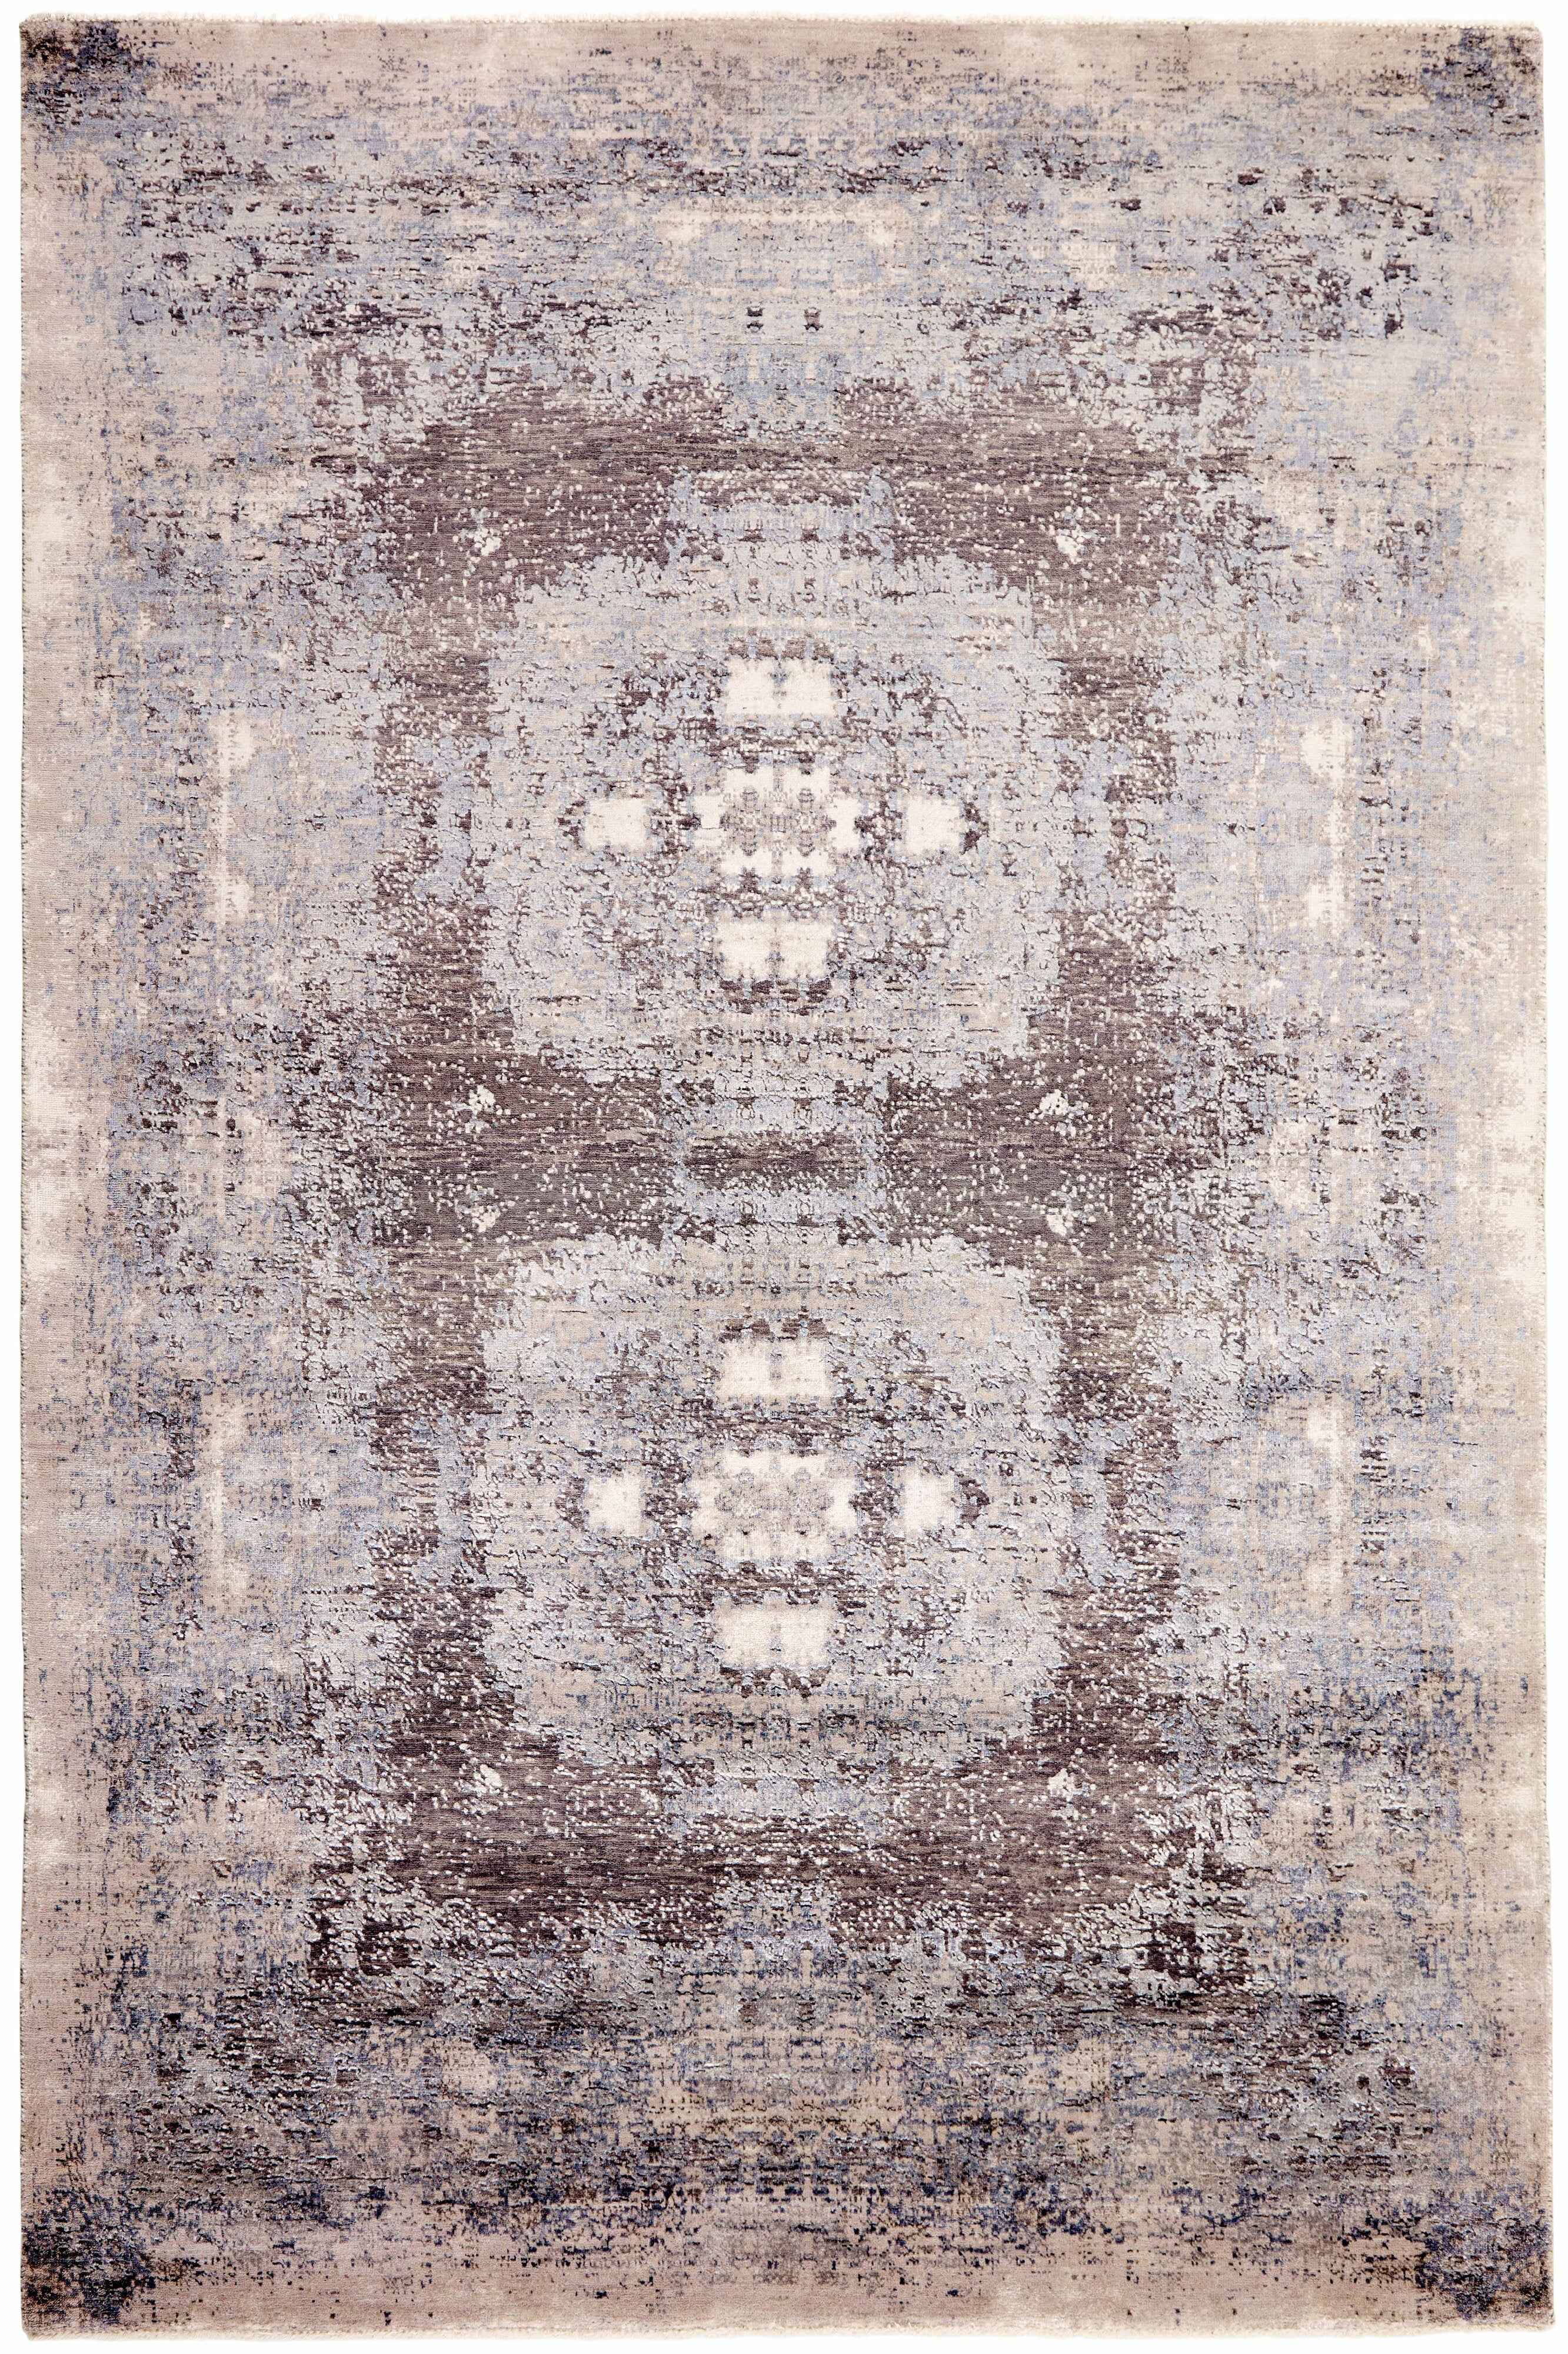 348x255 cm  Indian Wool/Viscose Multicolor Rug-840178C